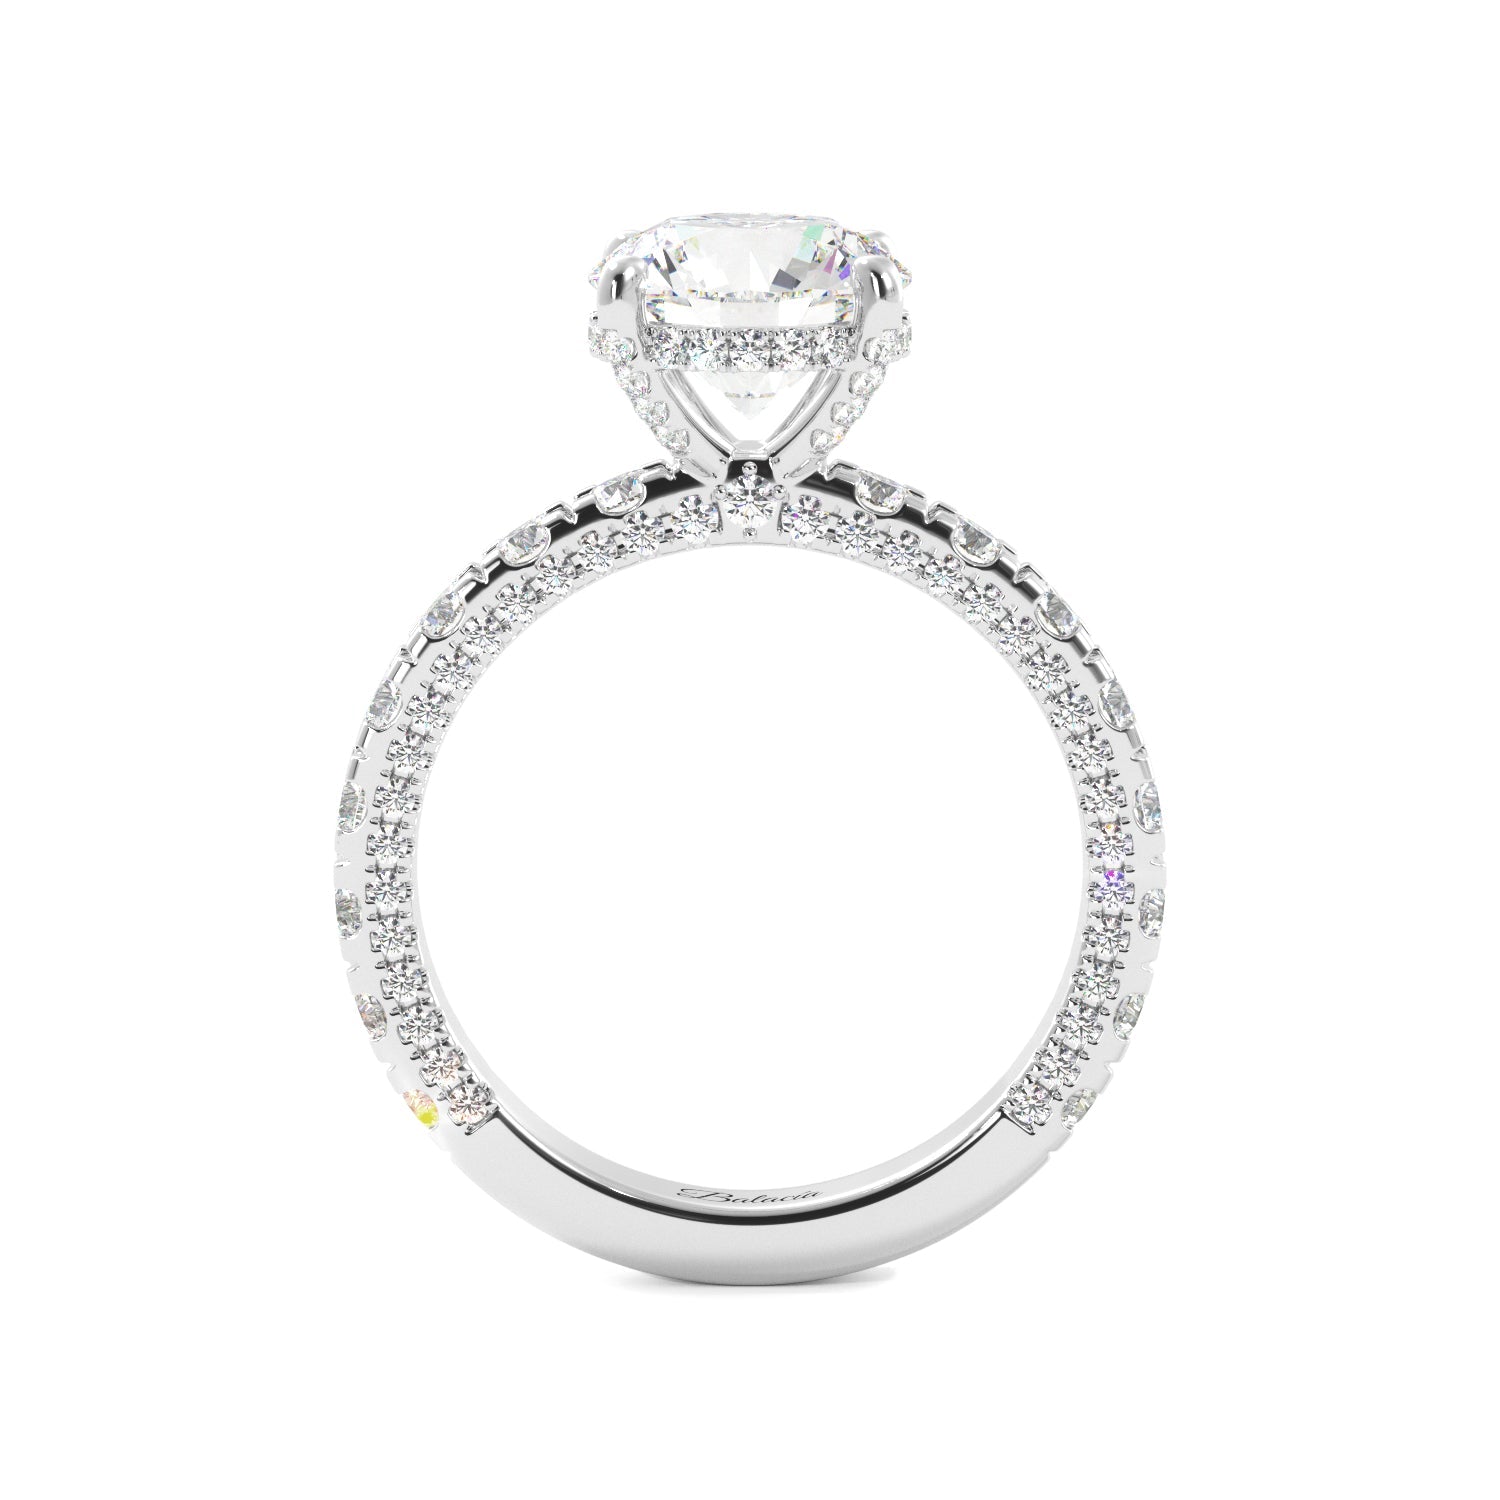 The Balacia Moissanite and Diamond Engagement Ring